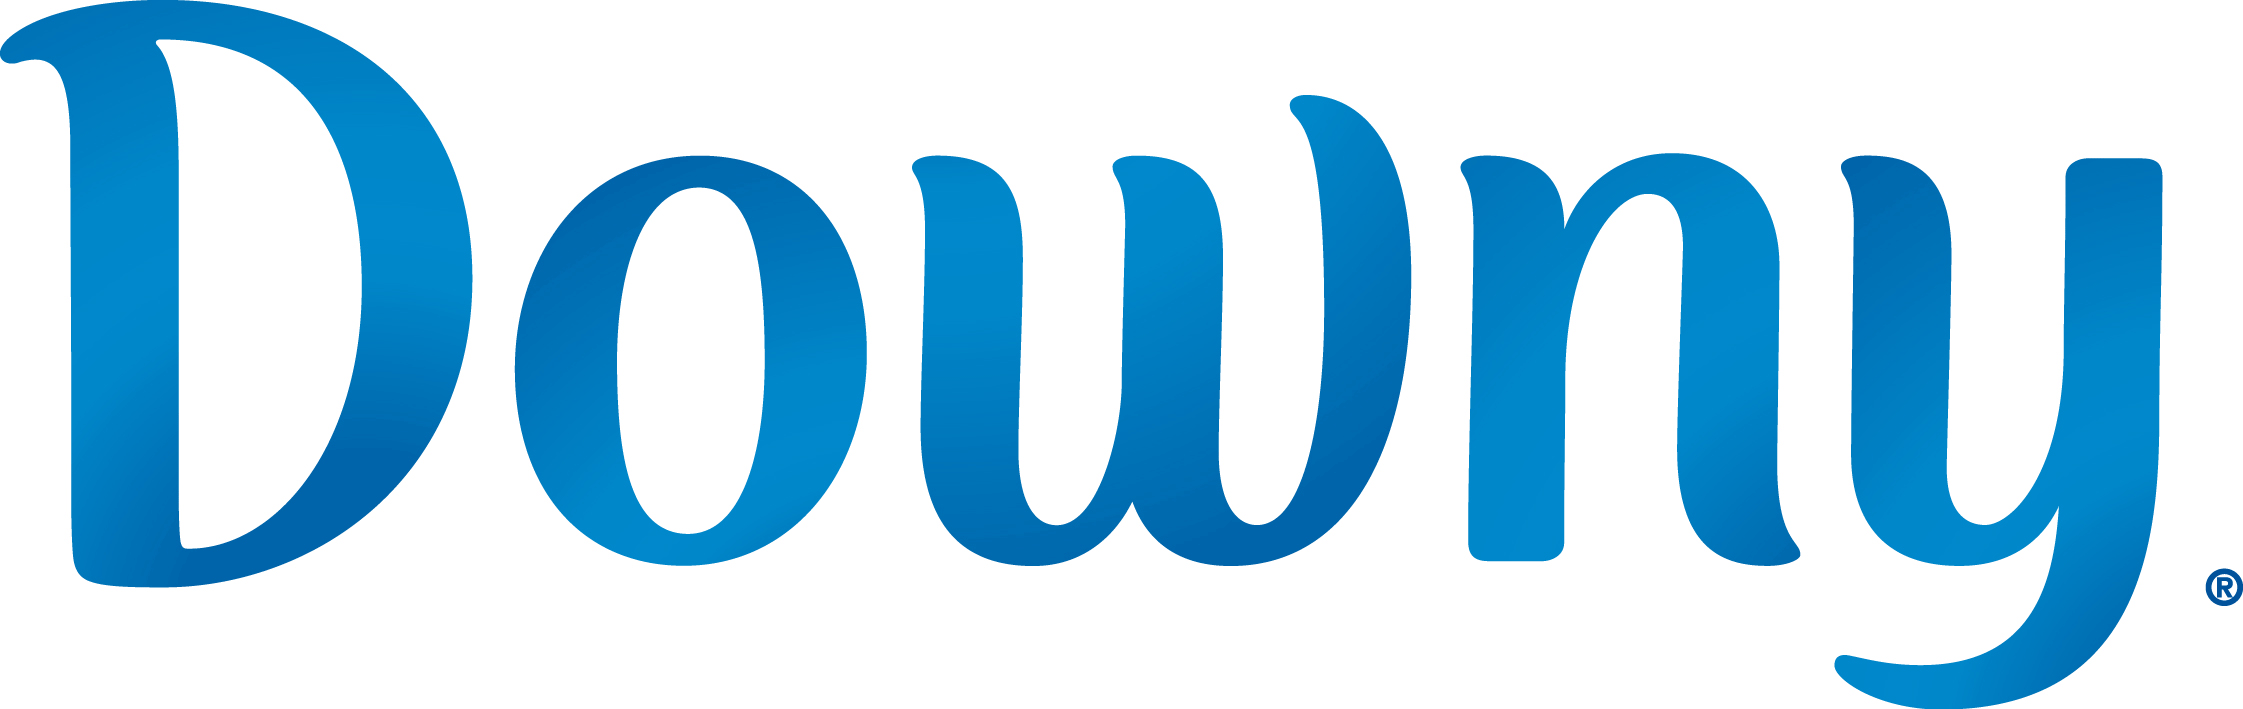 Downy Logo - Image - Downy logo.png | Logopedia | FANDOM powered by Wikia